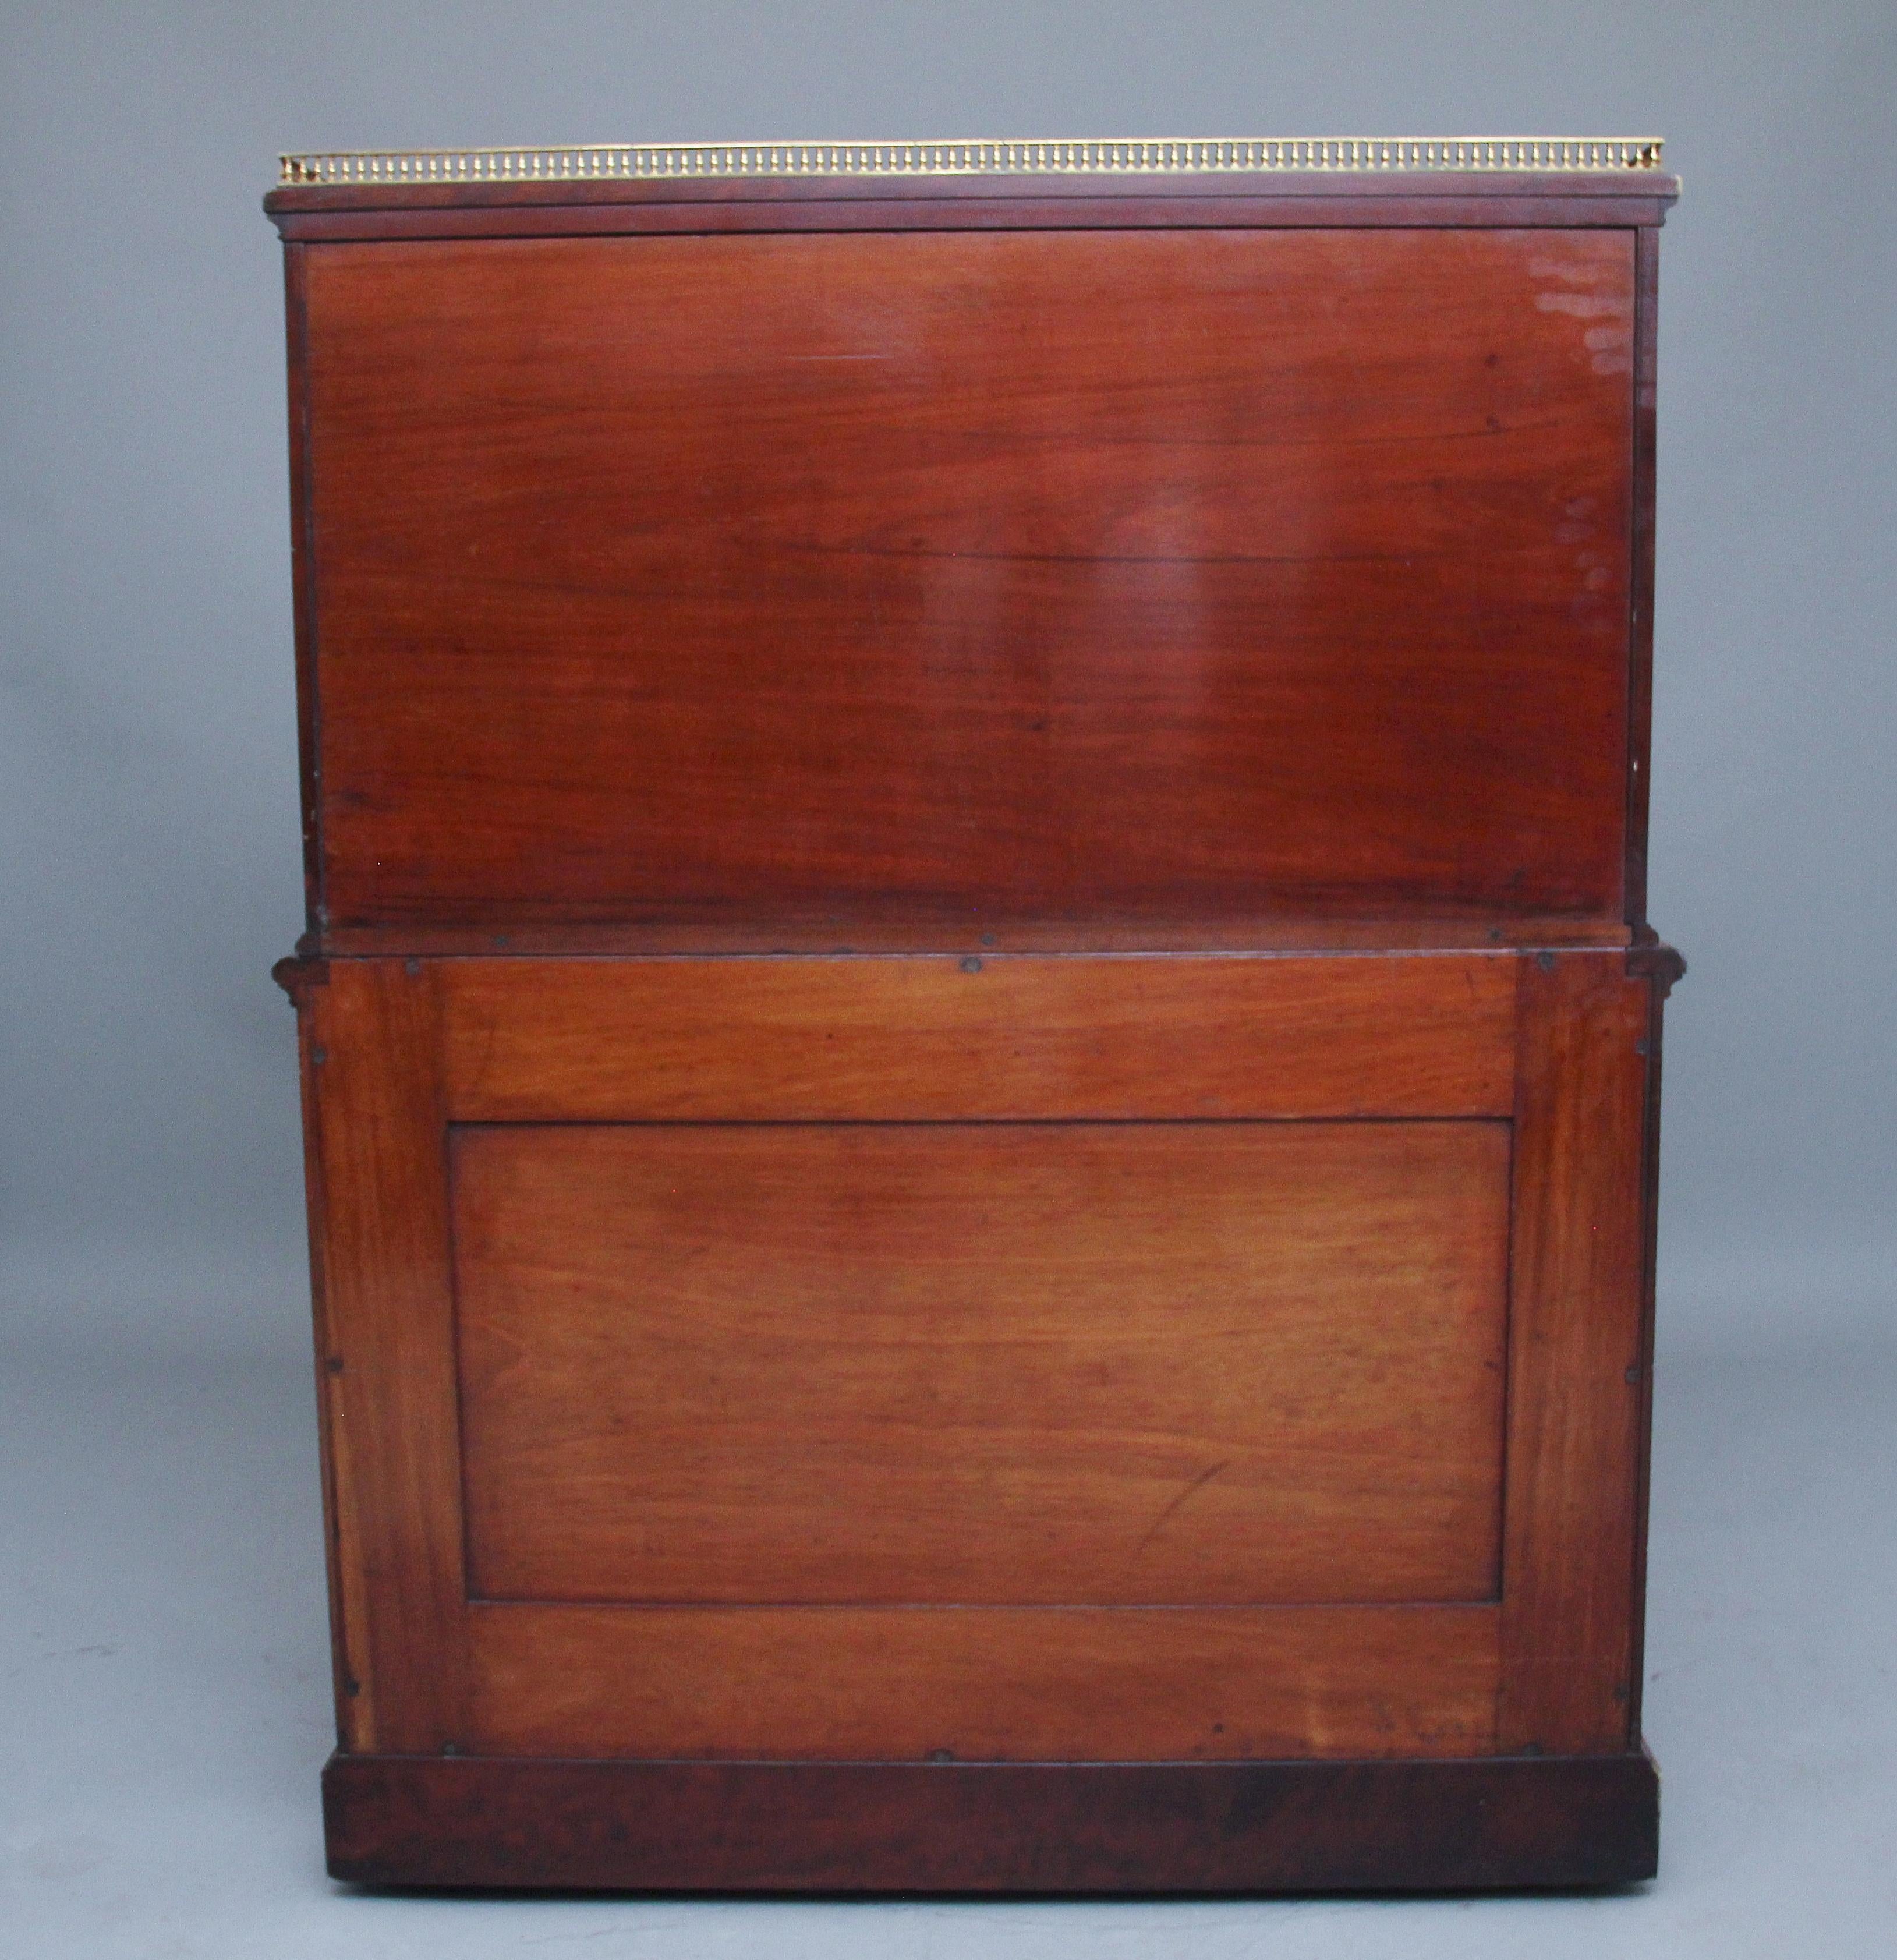 British Superb Quality 19th Century Mahogany Secretaire Desk Cabinet For Sale